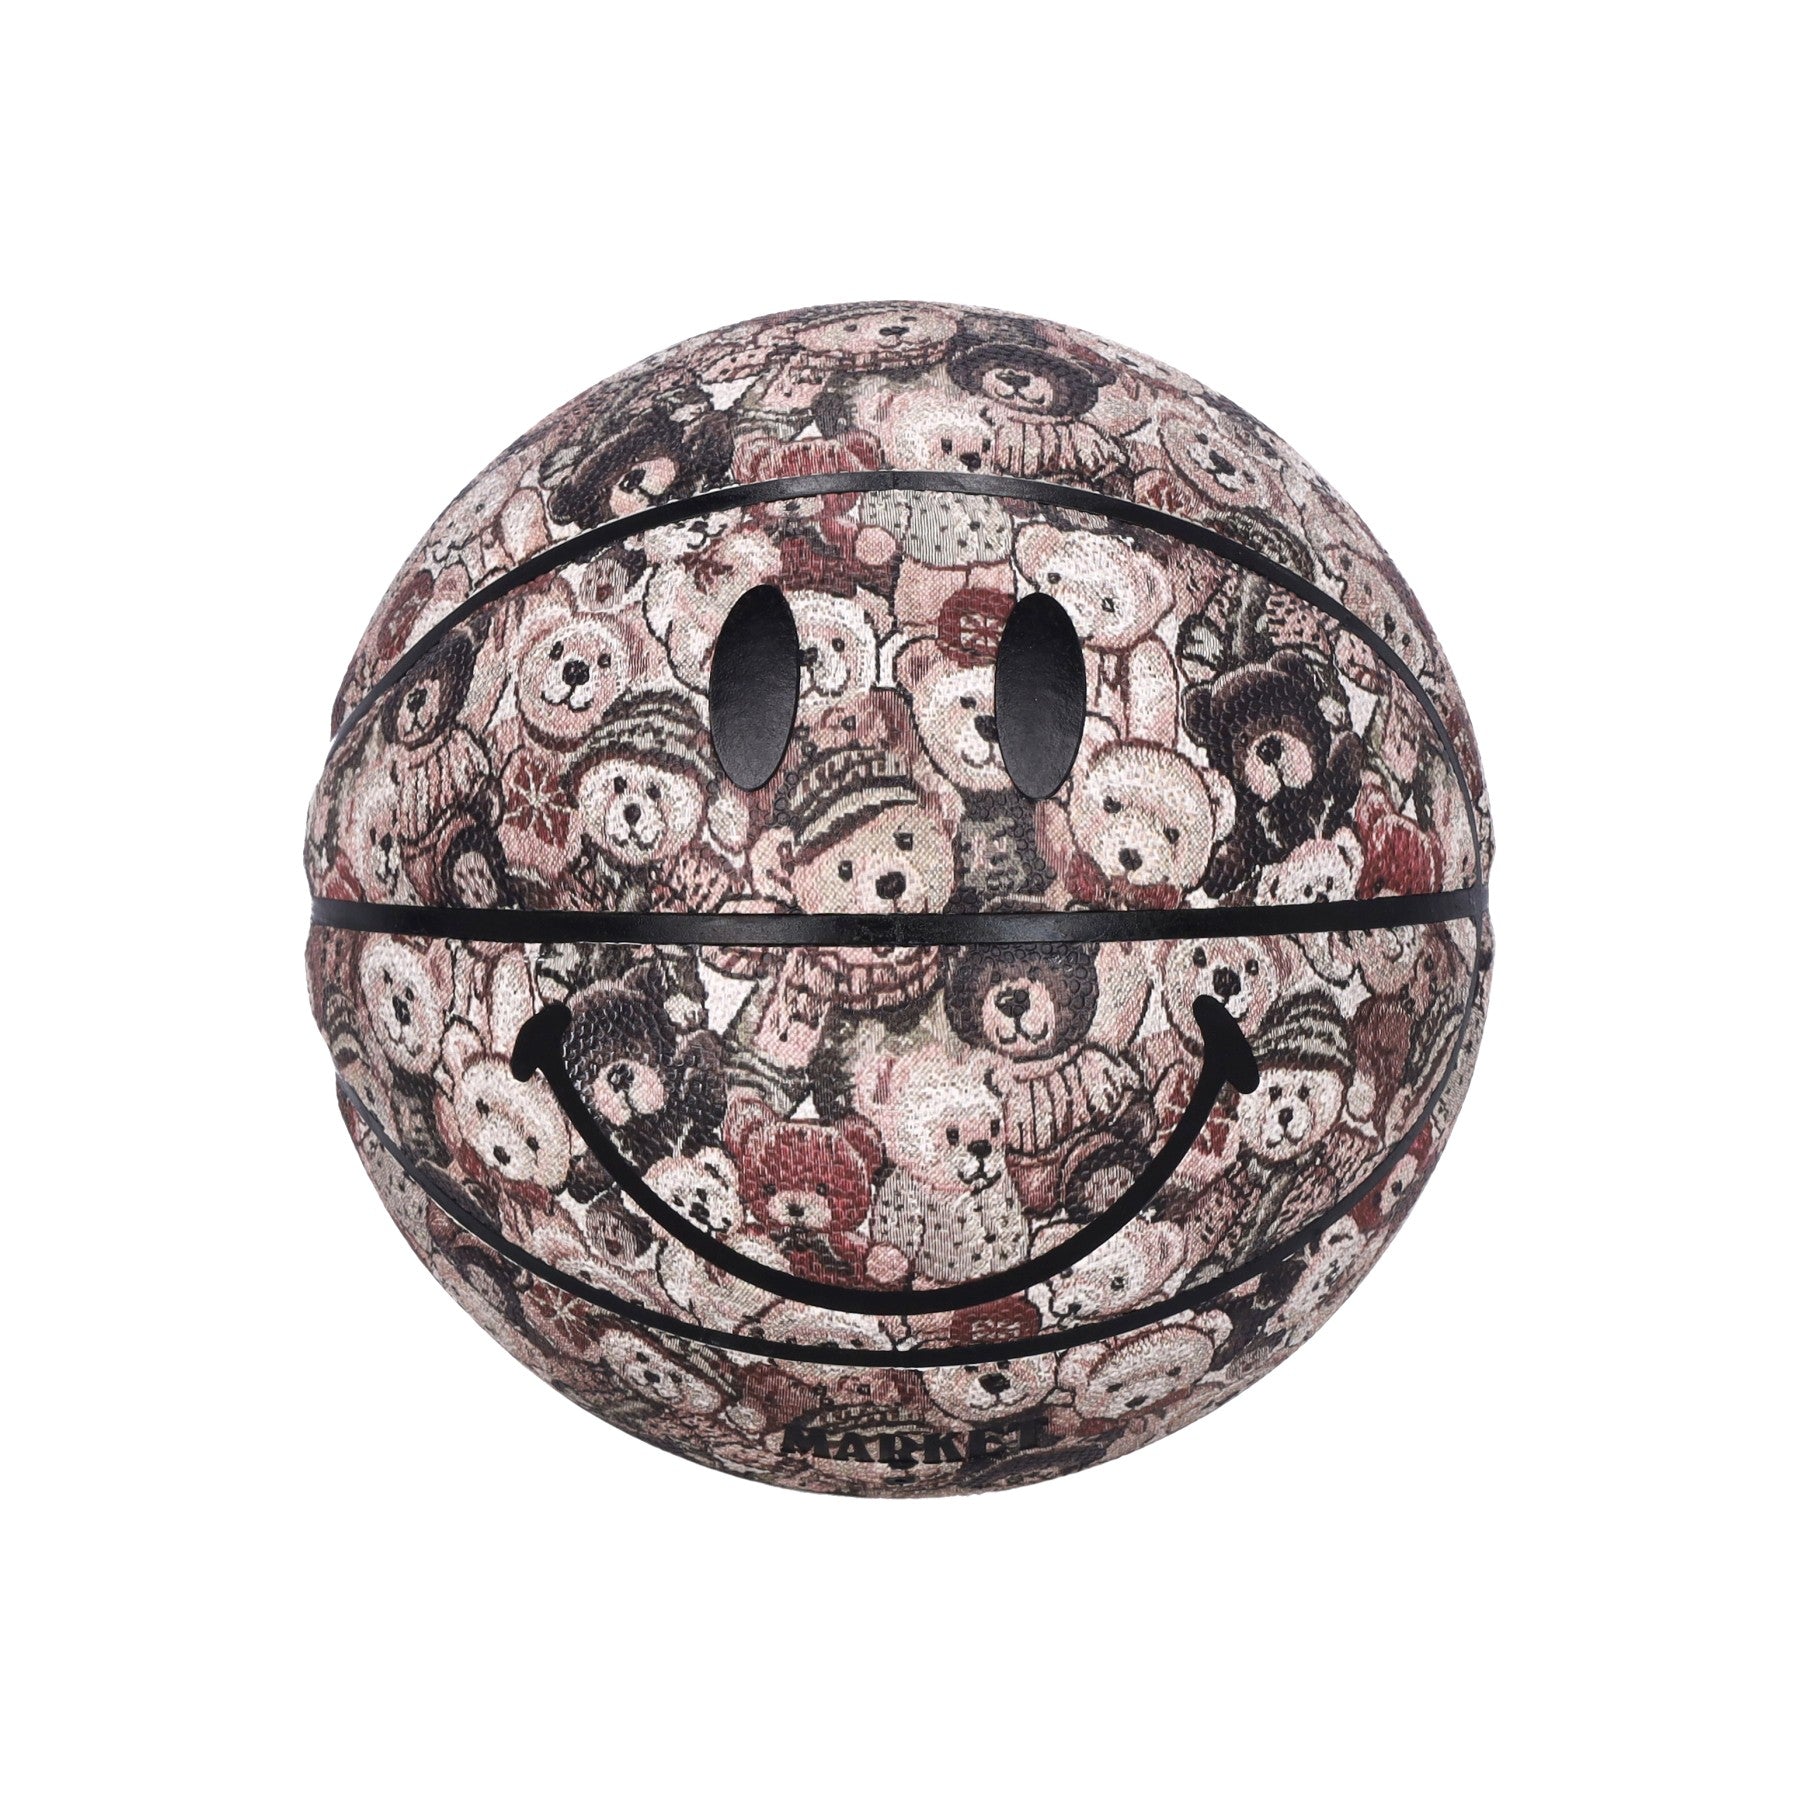 Market, Pallone Uomo Softcore Basketball Size 7 X Smiley, Multi